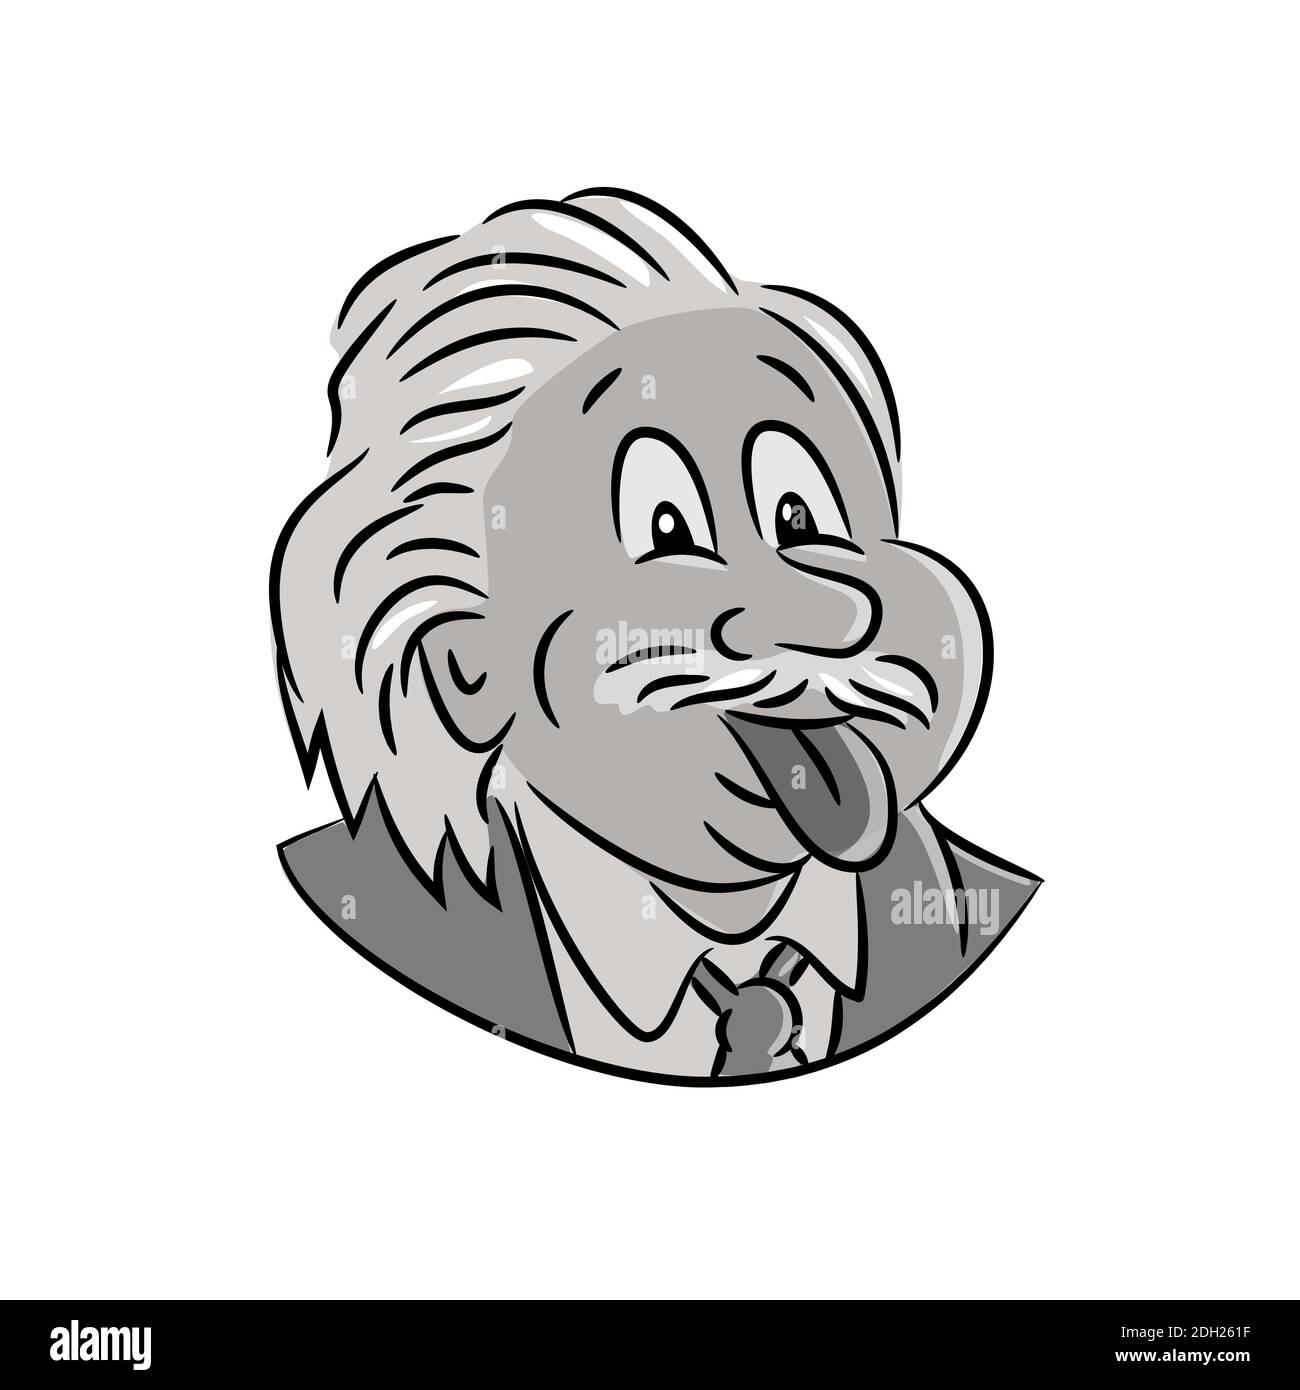 Albert Einstein Sticking Tongue Out Cartoon Stock Photo